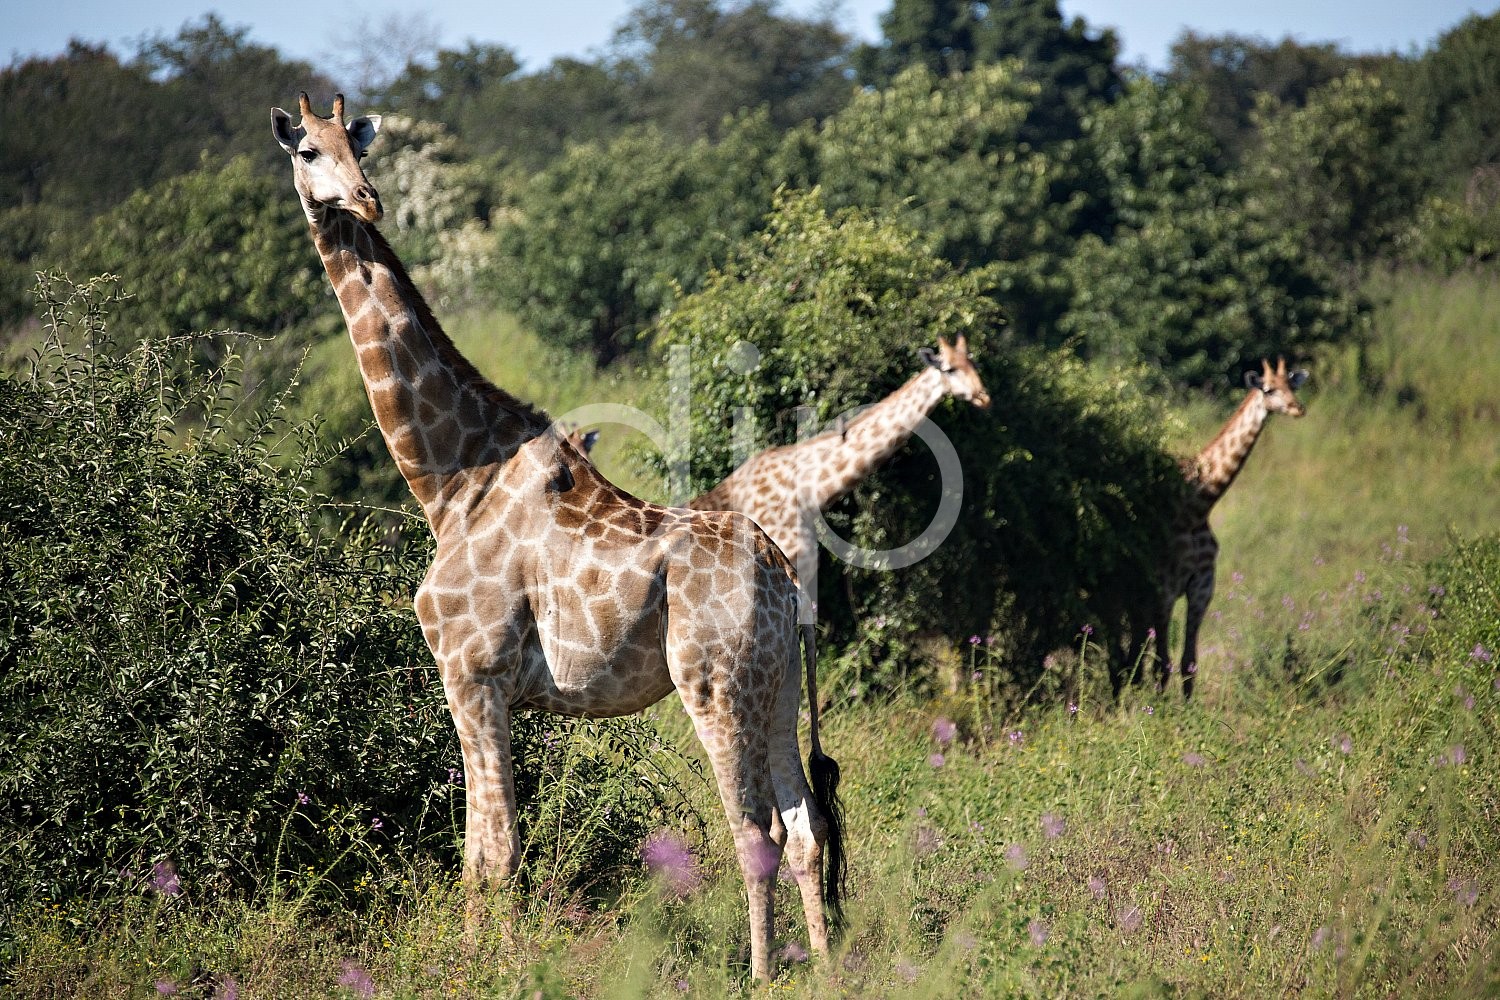 Safari, Zimbabwe, blue, brown, d. jones photography, djonesphoto, giraffes, green, yellow, Africa